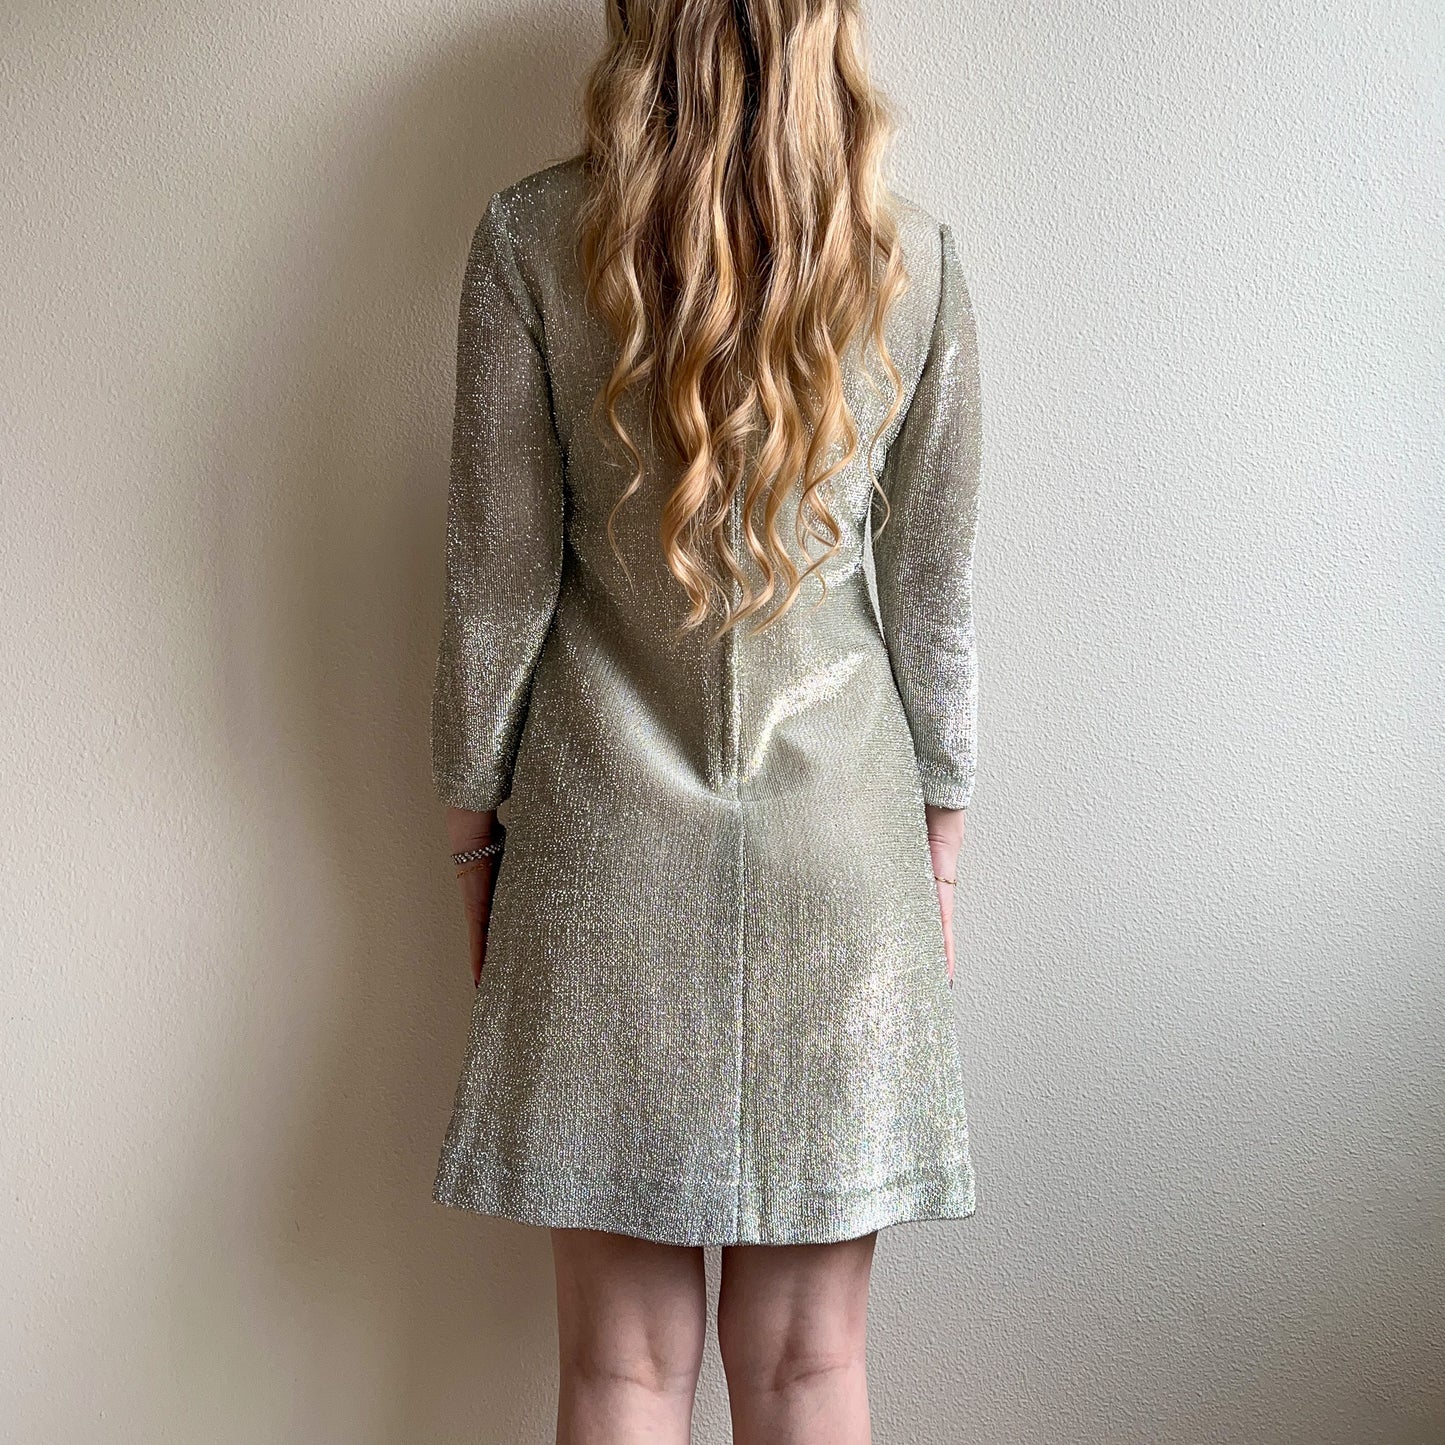 1960s Silver Metallic Long Sleeve Mod Dress (S/M)